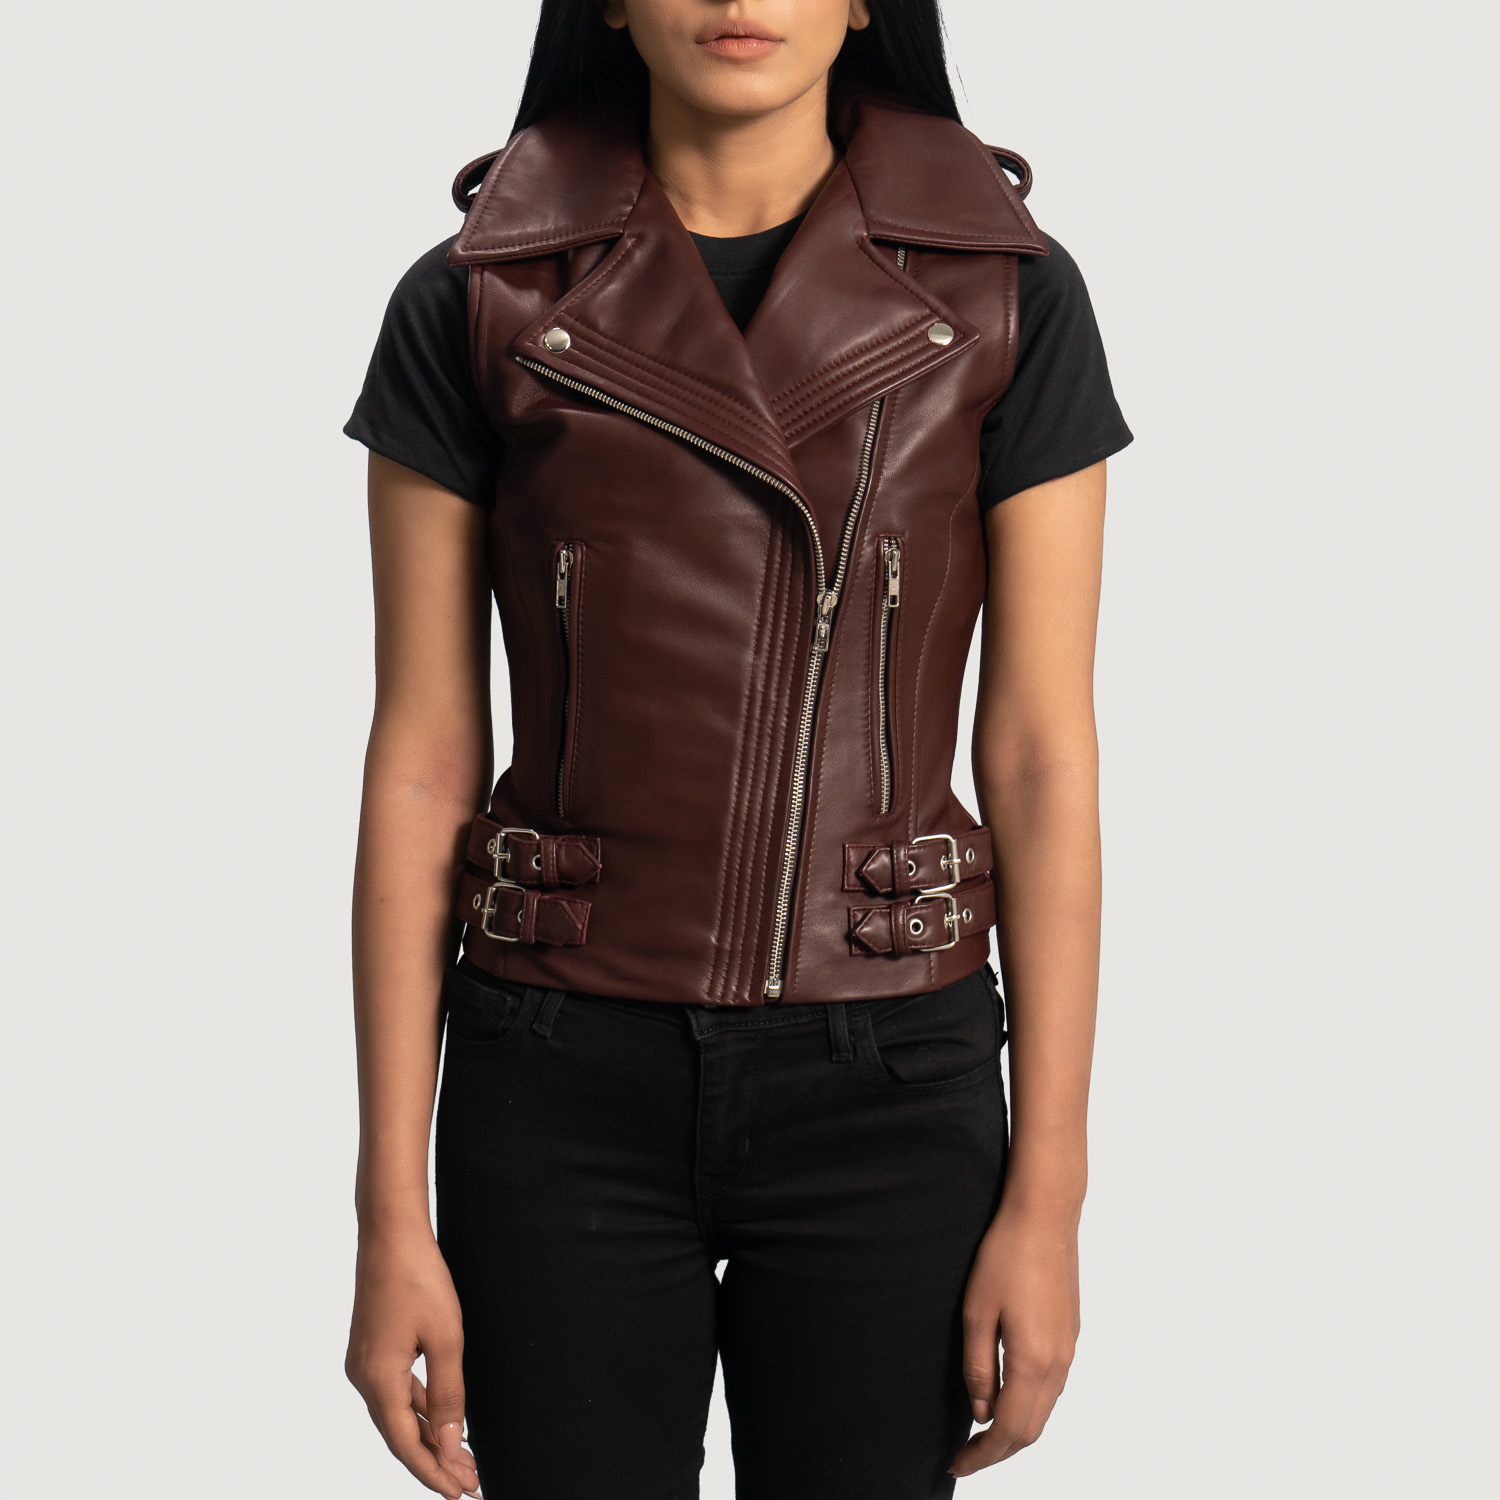 Rhonda Maroon Leather Biker Vest
